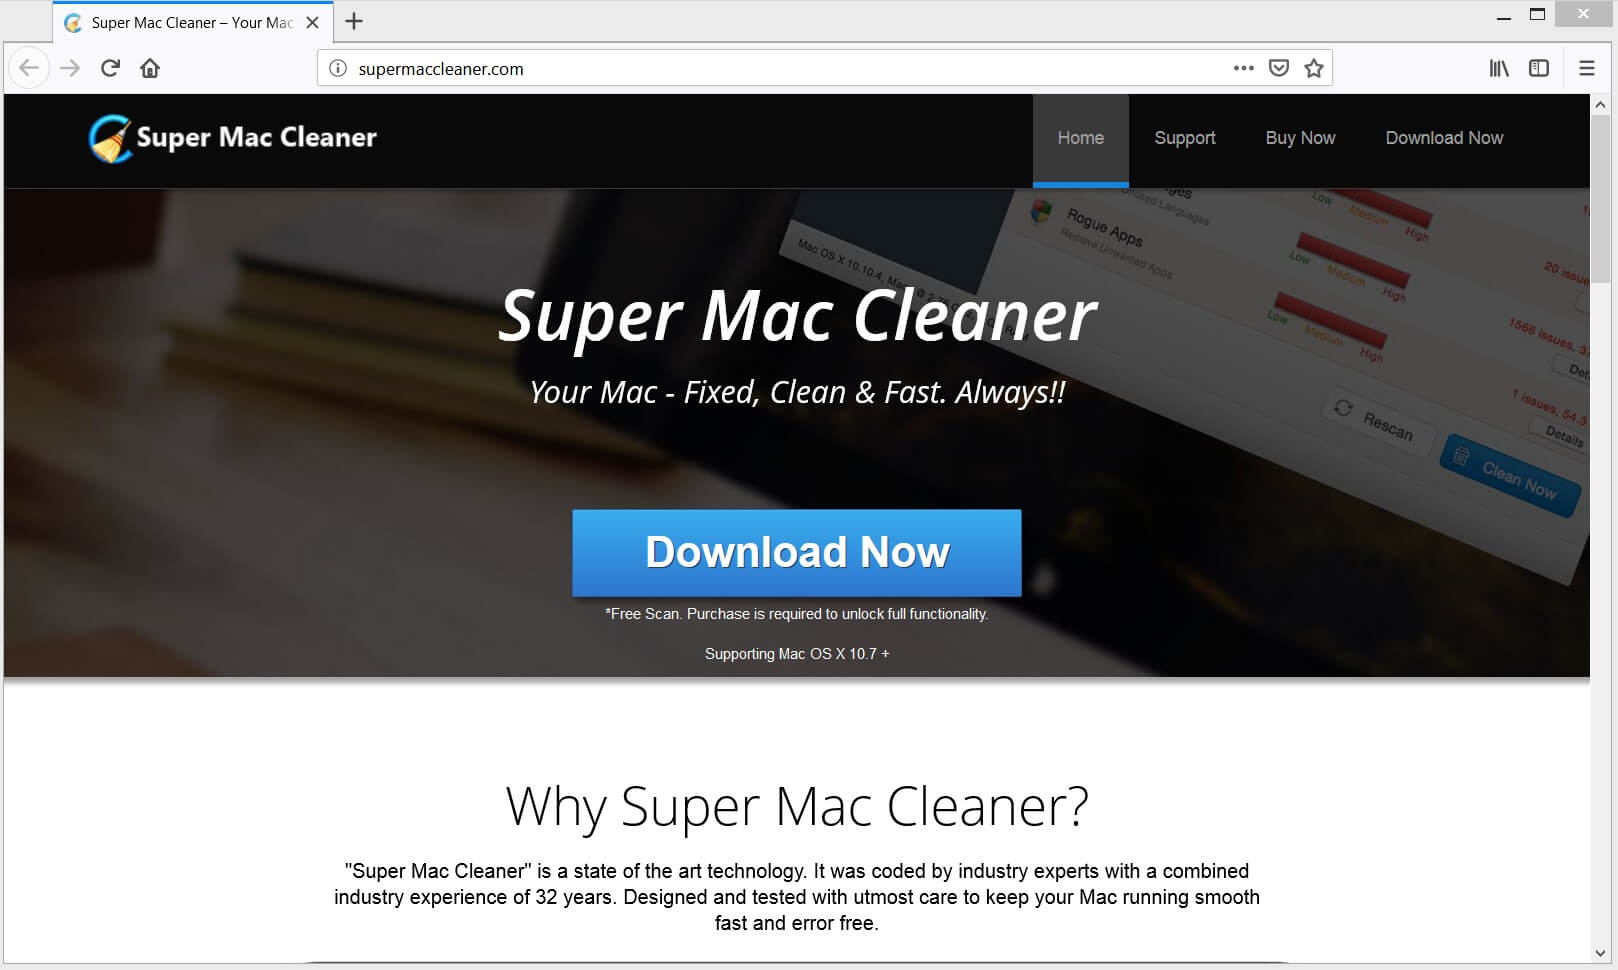 super mac cleaner potentially unwanted program official website sensorstechforum guide